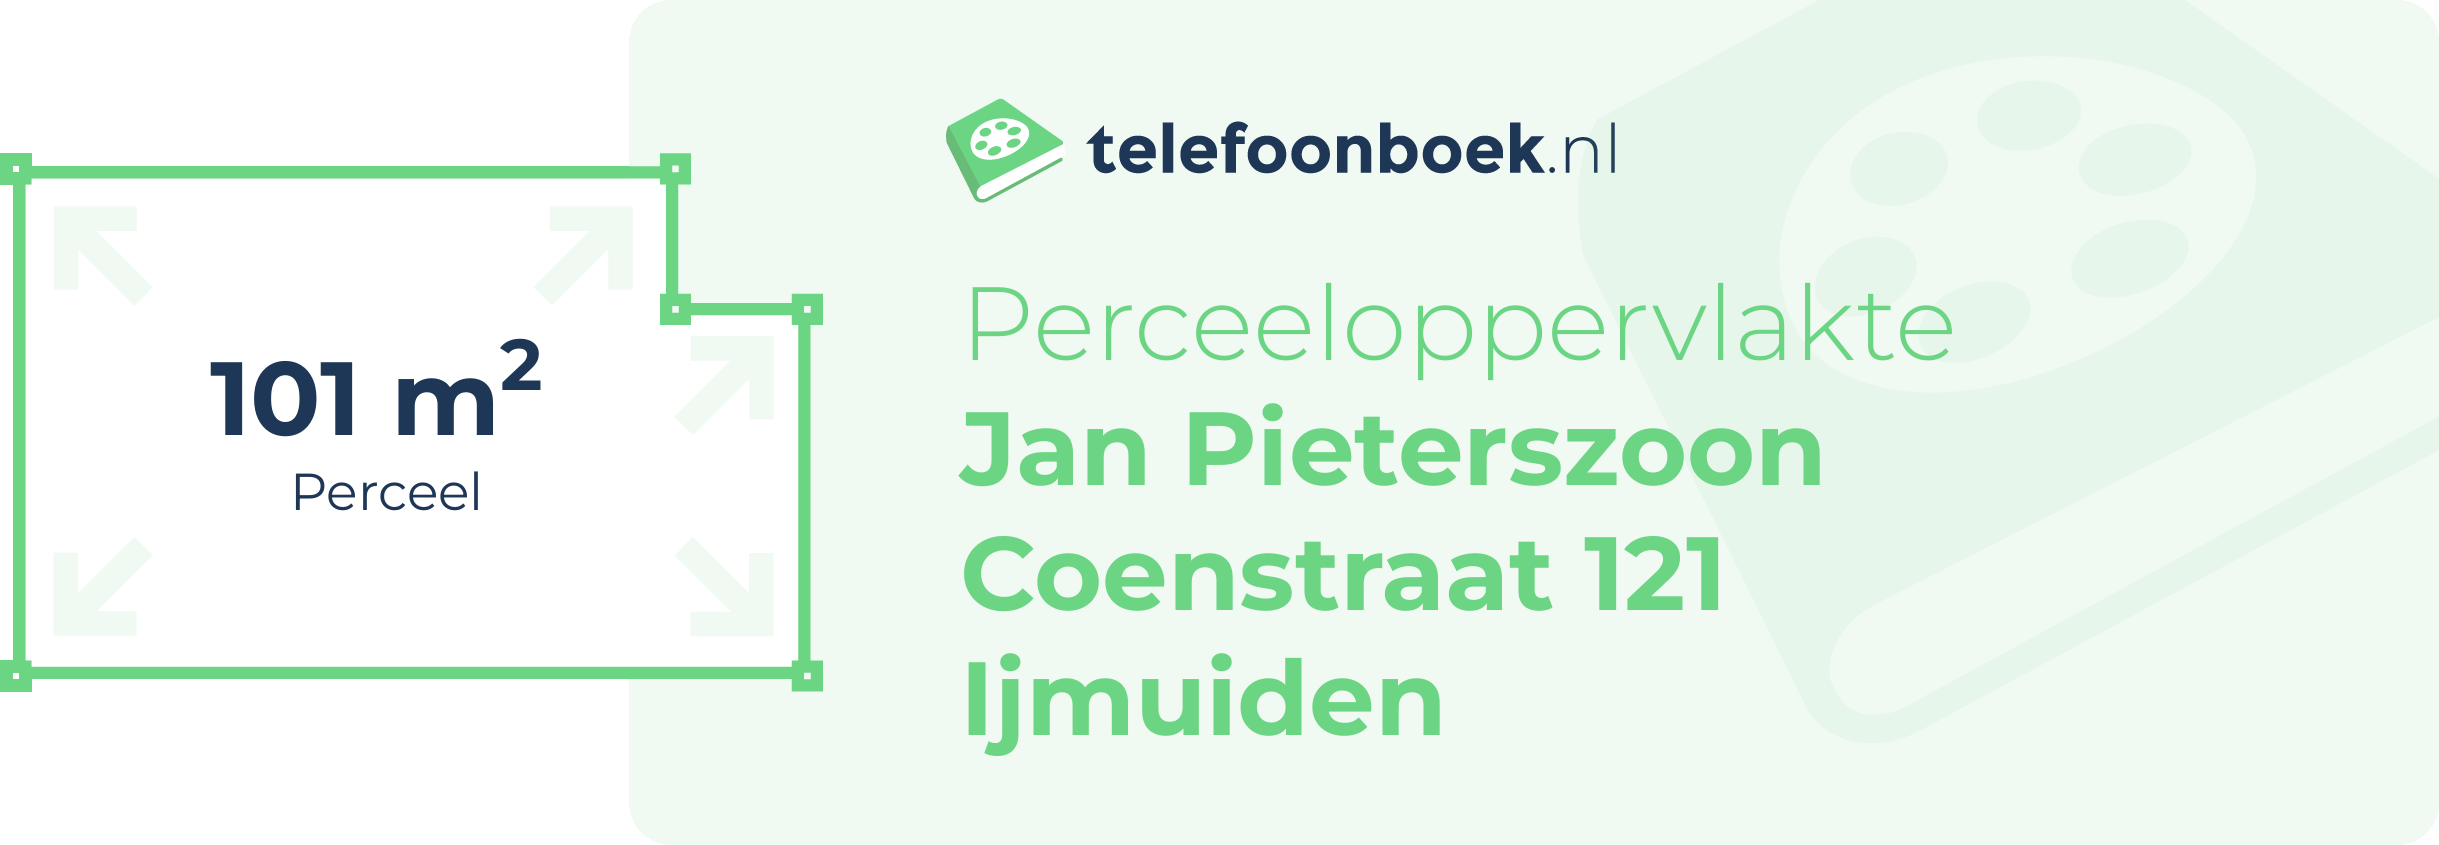 Perceeloppervlakte Jan Pieterszoon Coenstraat 121 Ijmuiden